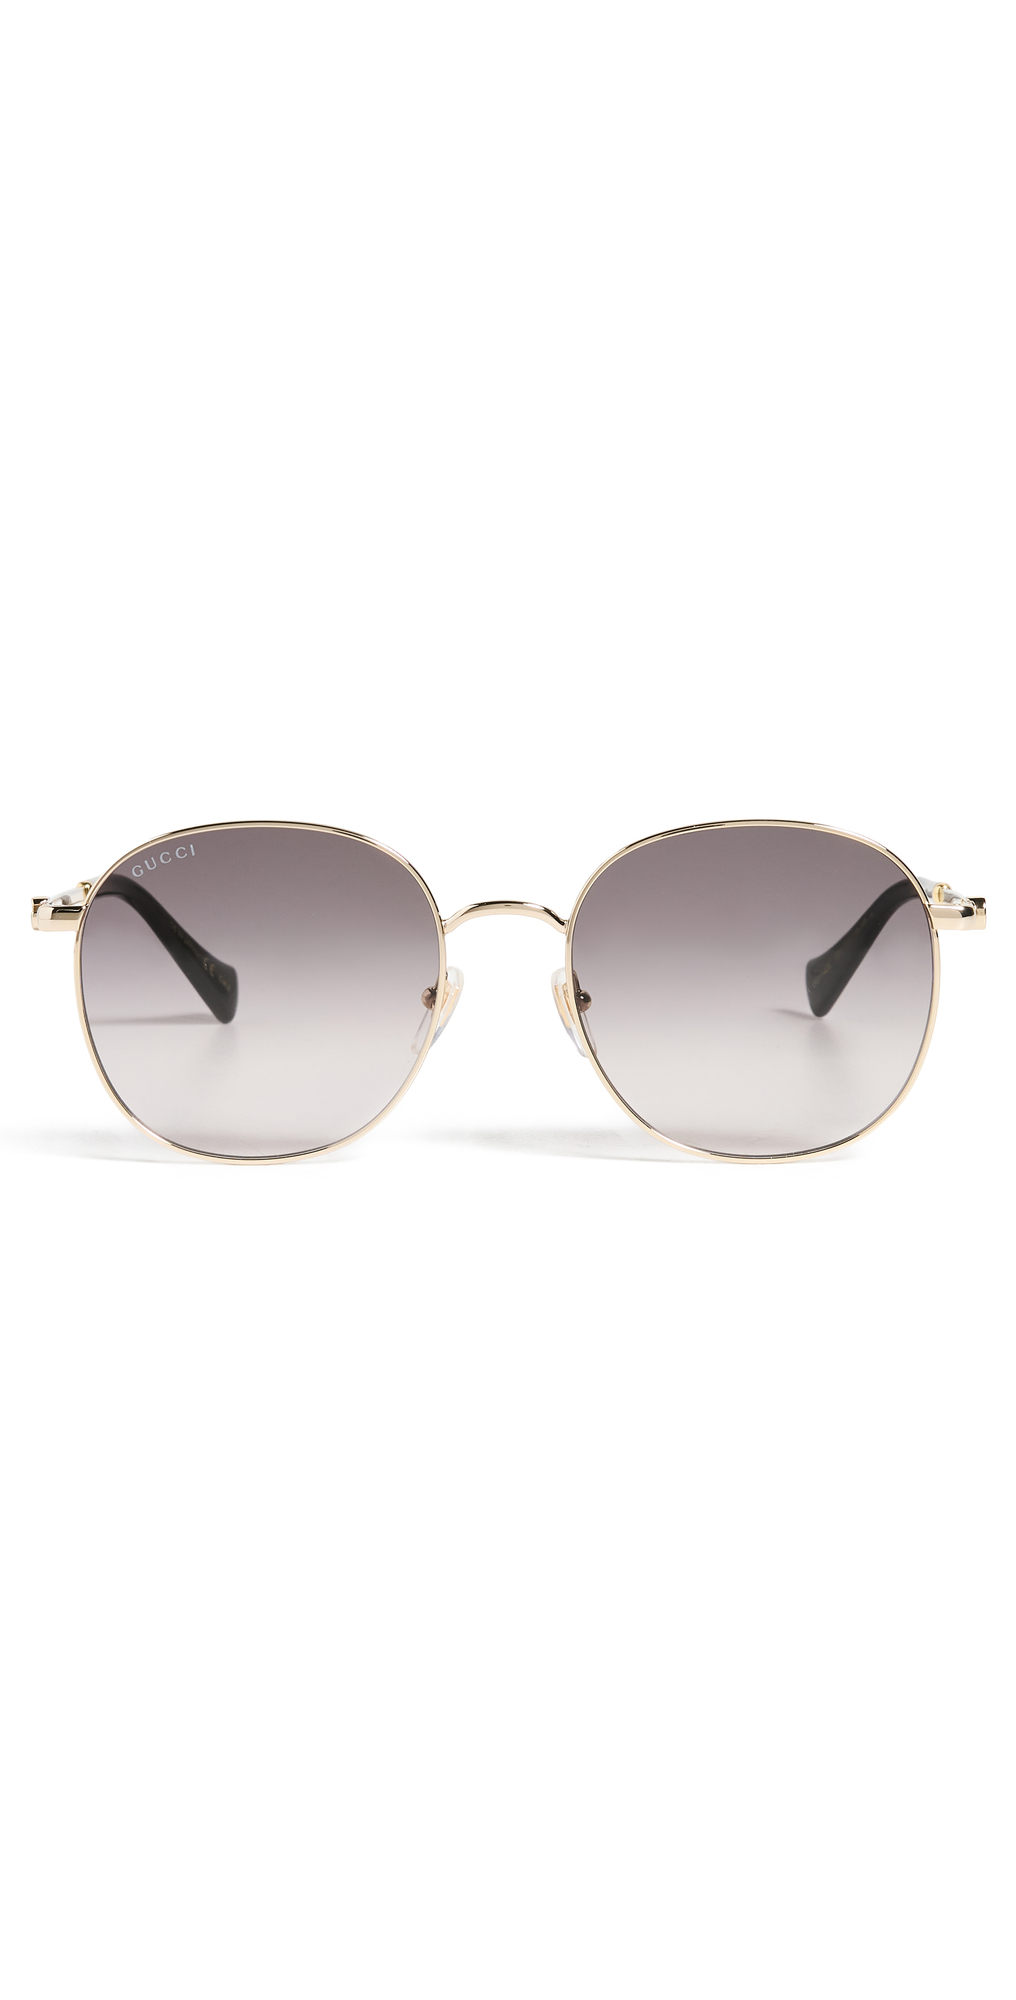 Gucci Mini Running Metal Round Sunglasses in gold / grey